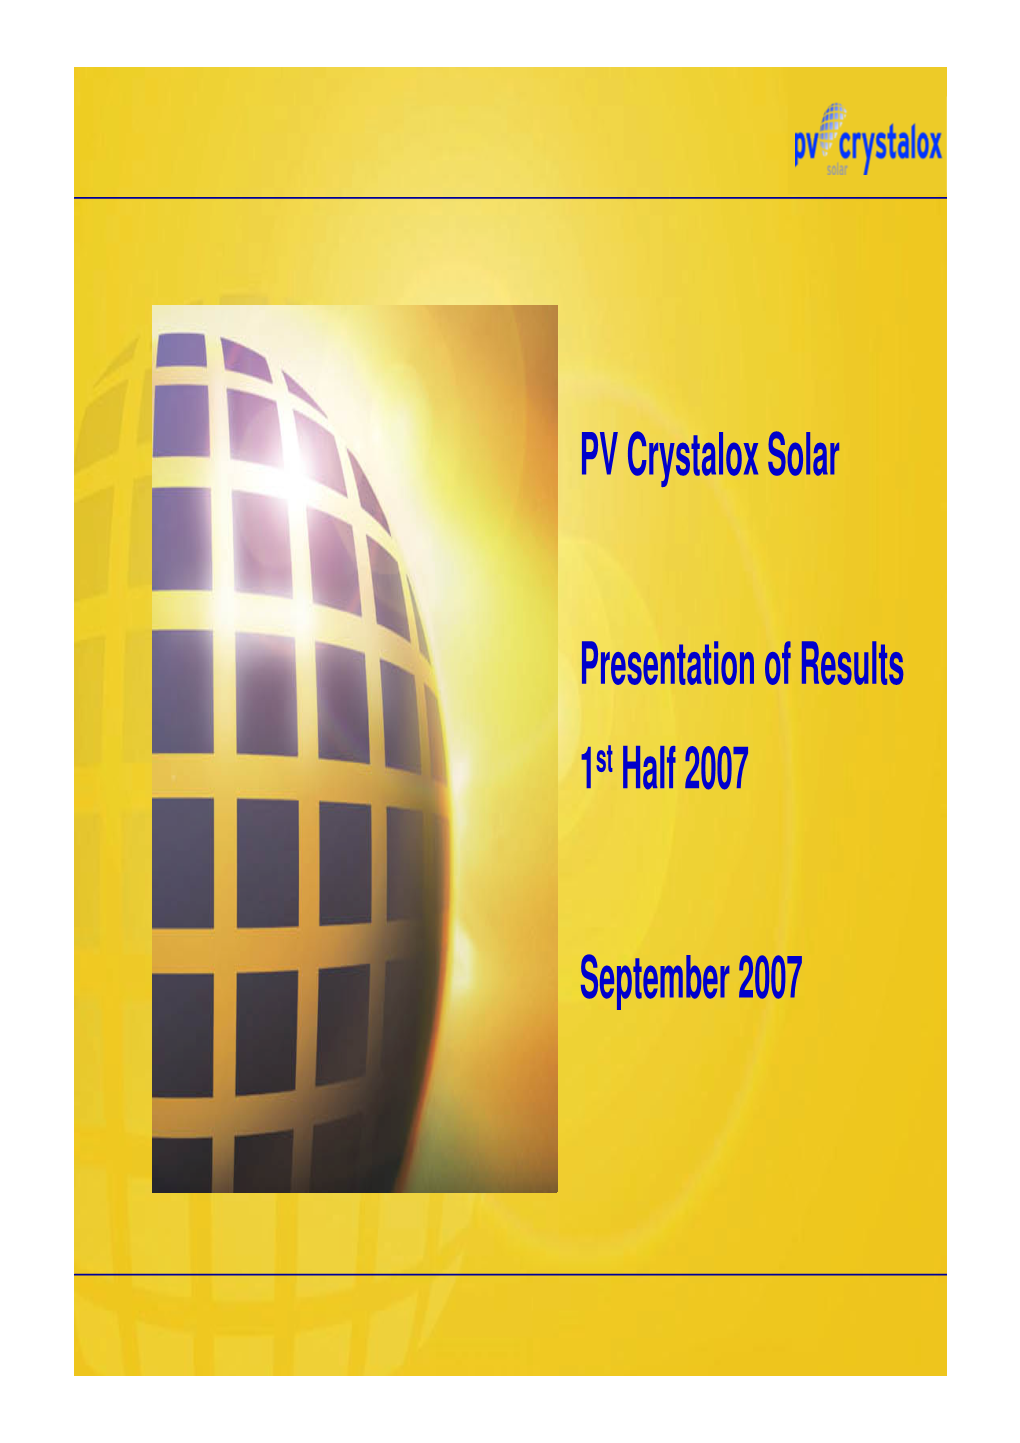 PV Crystalox Solar Presentation of Results, 1St